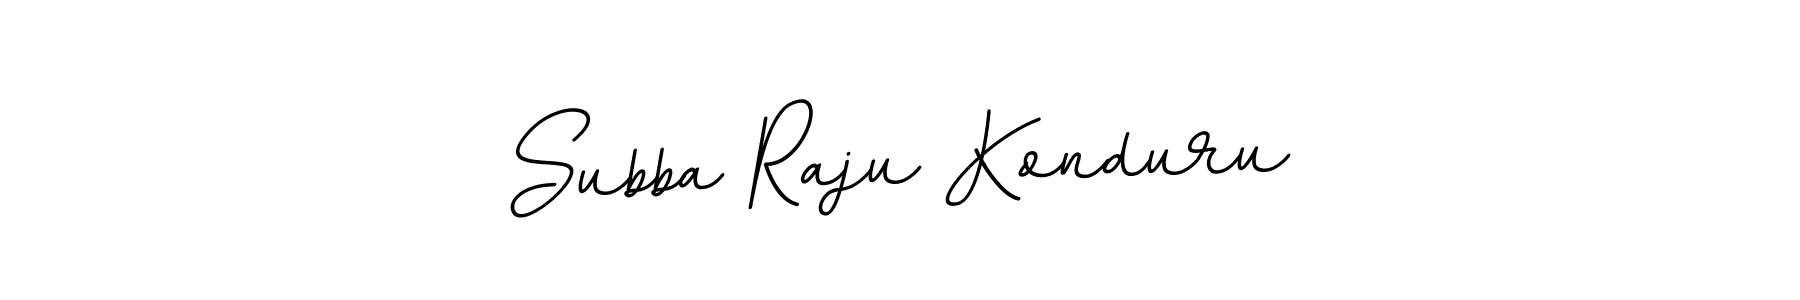 How to make Subba Raju Konduru signature? BallpointsItalic-DORy9 is a professional autograph style. Create handwritten signature for Subba Raju Konduru name. Subba Raju Konduru signature style 11 images and pictures png